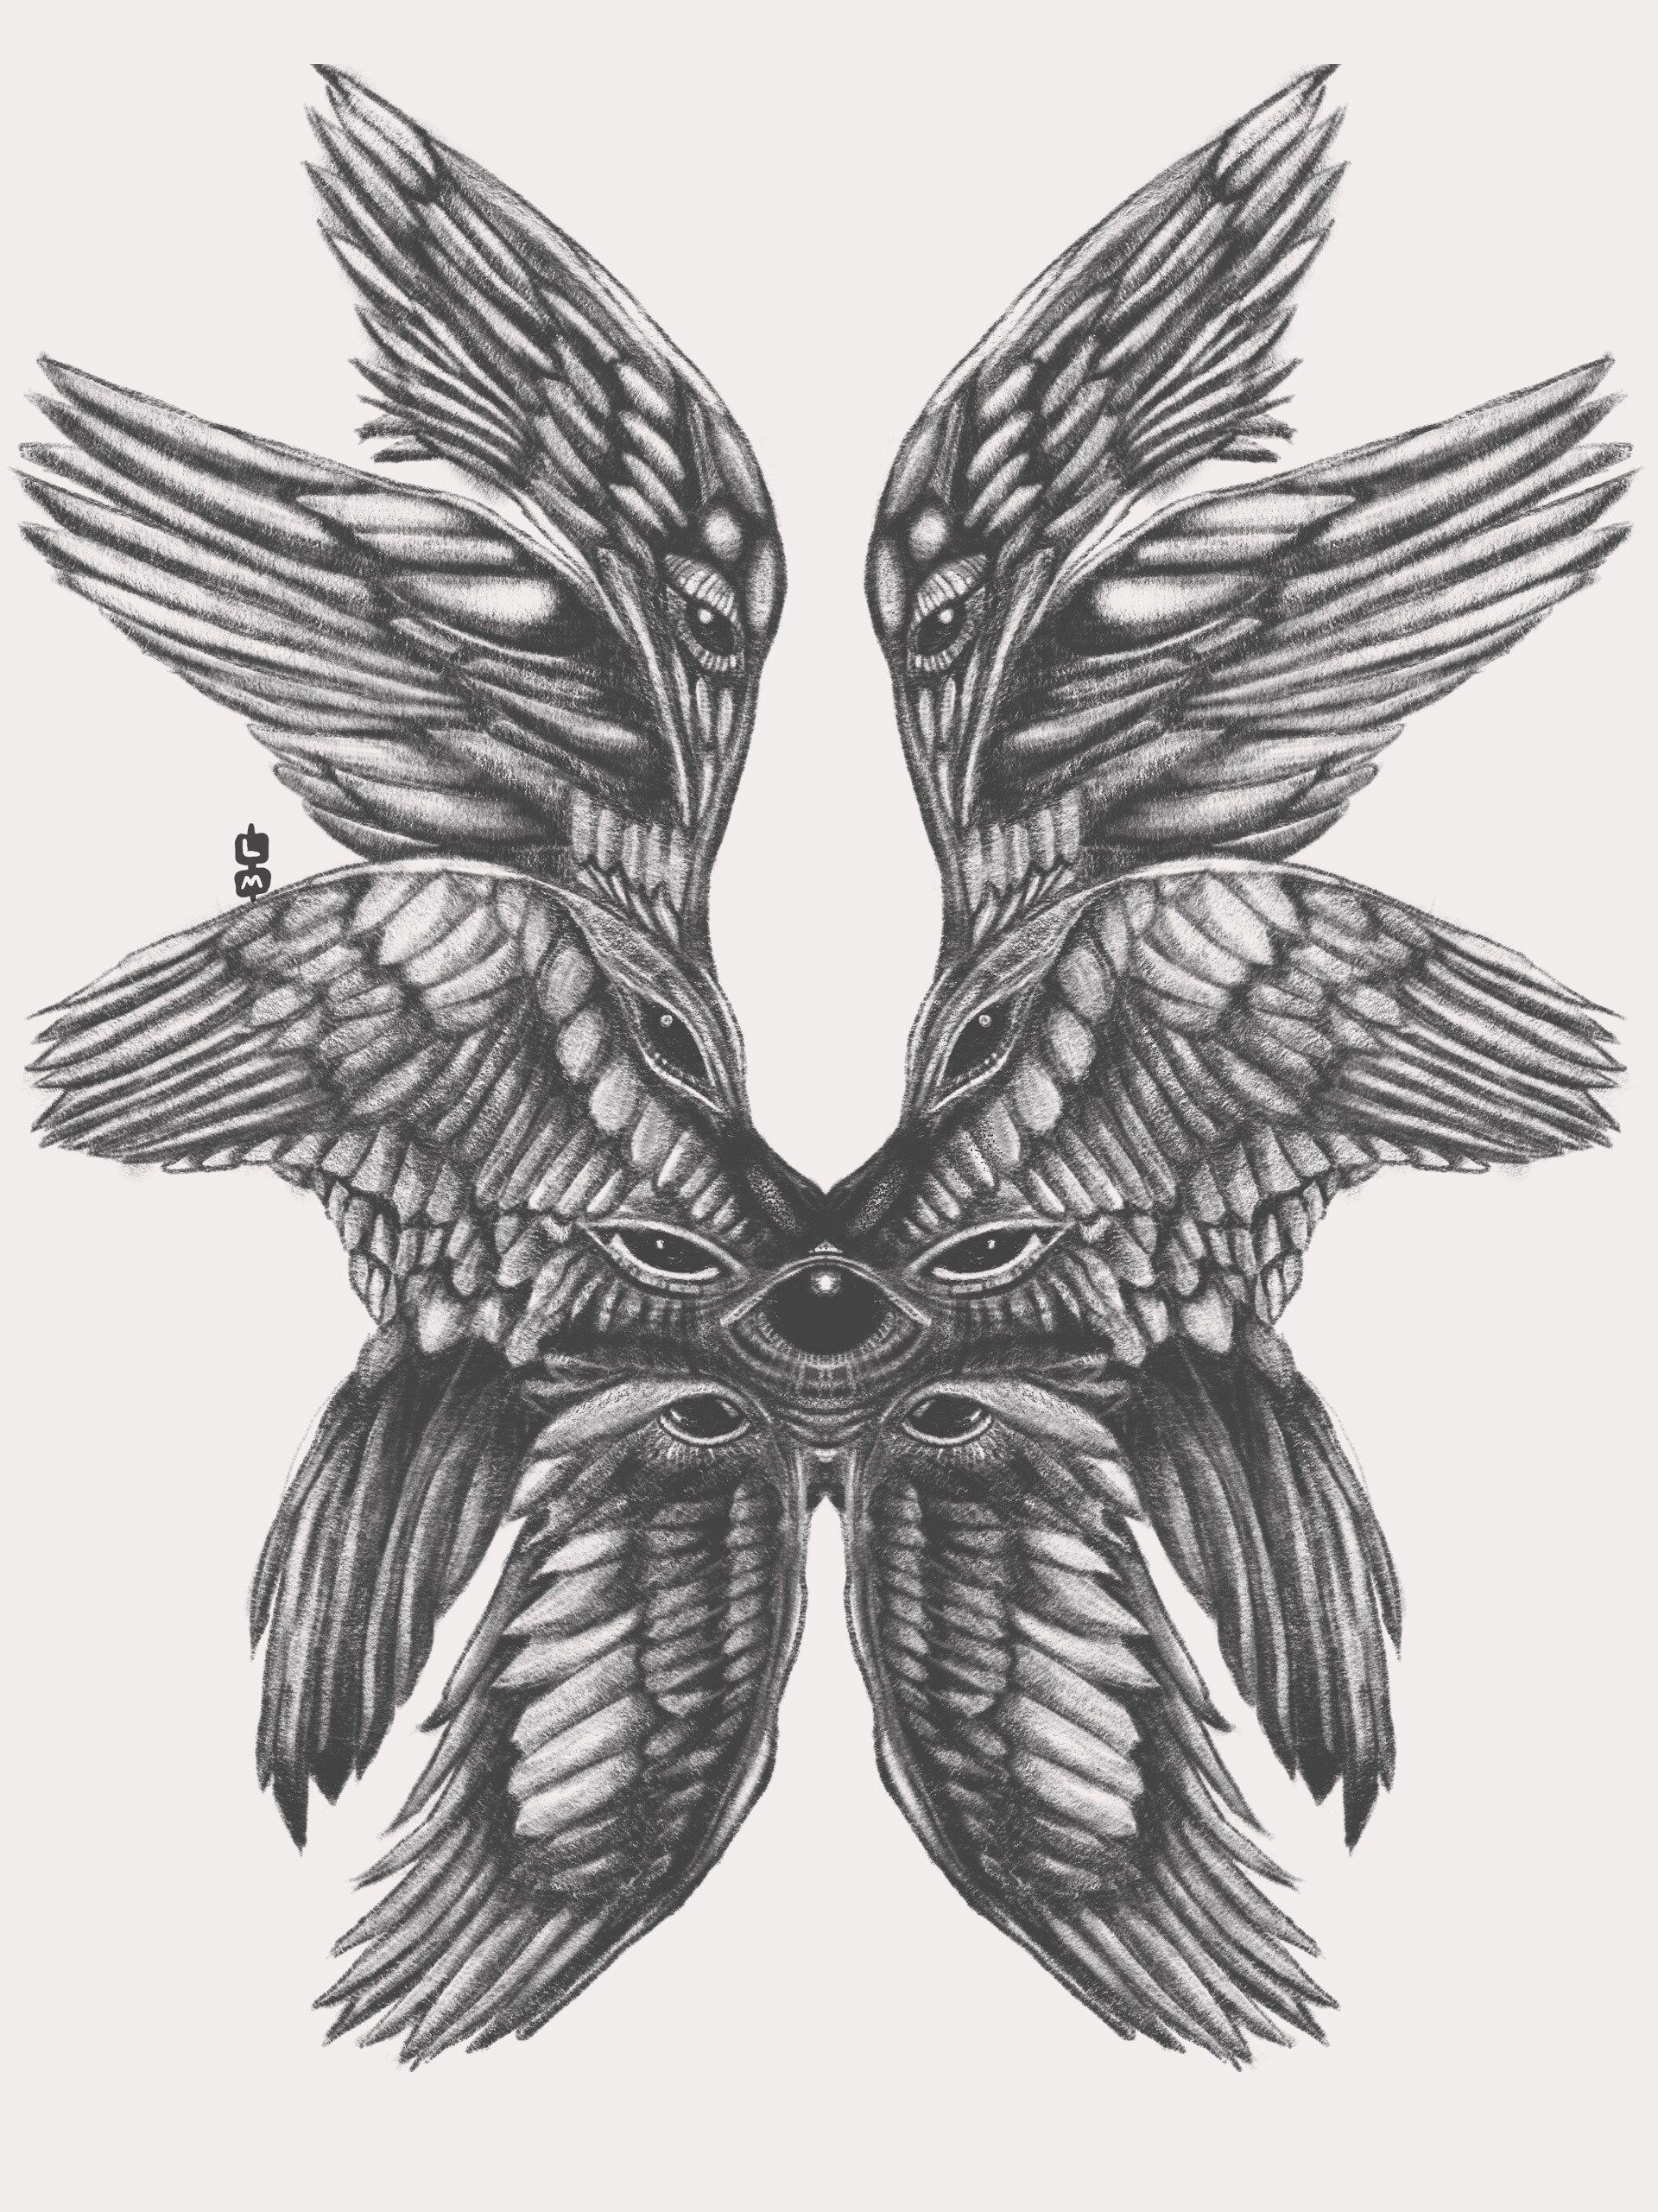 41 Seraphim Tattoo Designs to Explore the Beauty and Symbolism of Seraphim  Tattoos  Psycho Tats